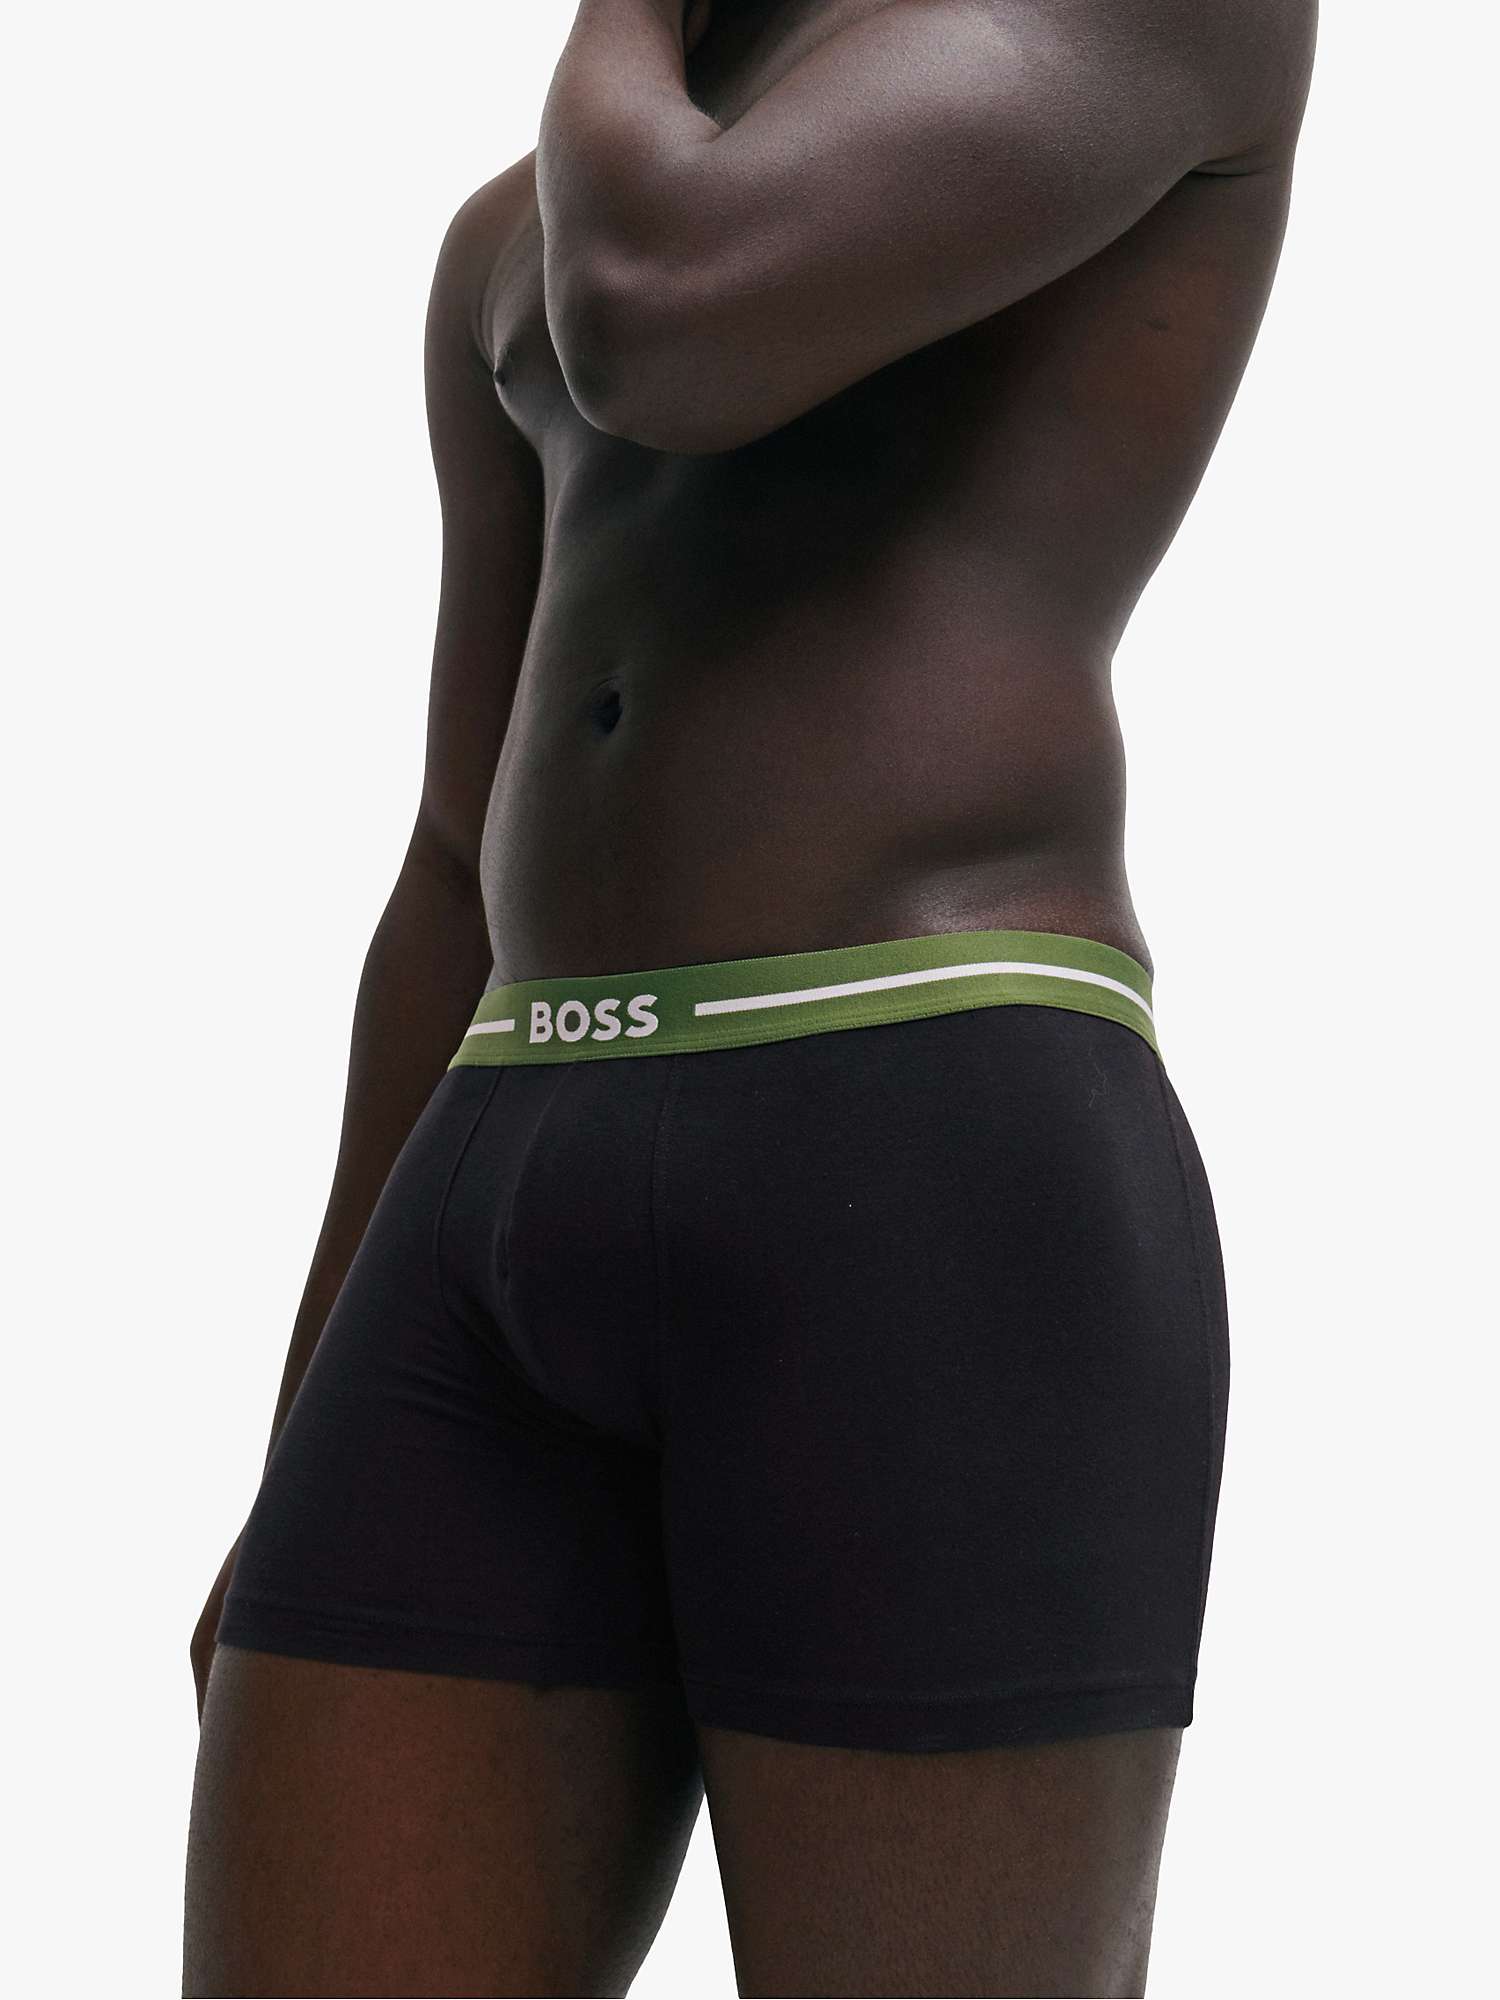 Buy BOSS Logo Waist Cotton Stretch Trunks, Pack of 3, Black/Multi Online at johnlewis.com